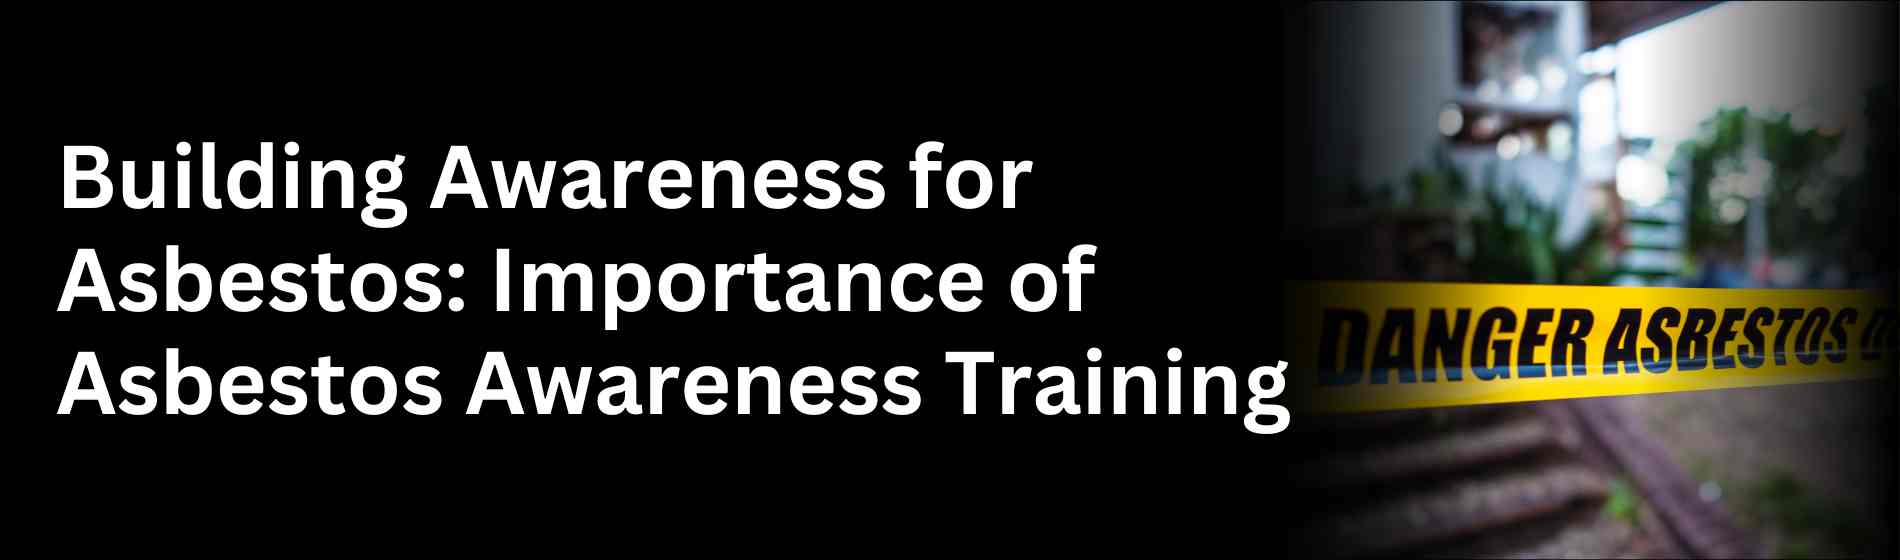 Importance of Asbestos Awareness Training